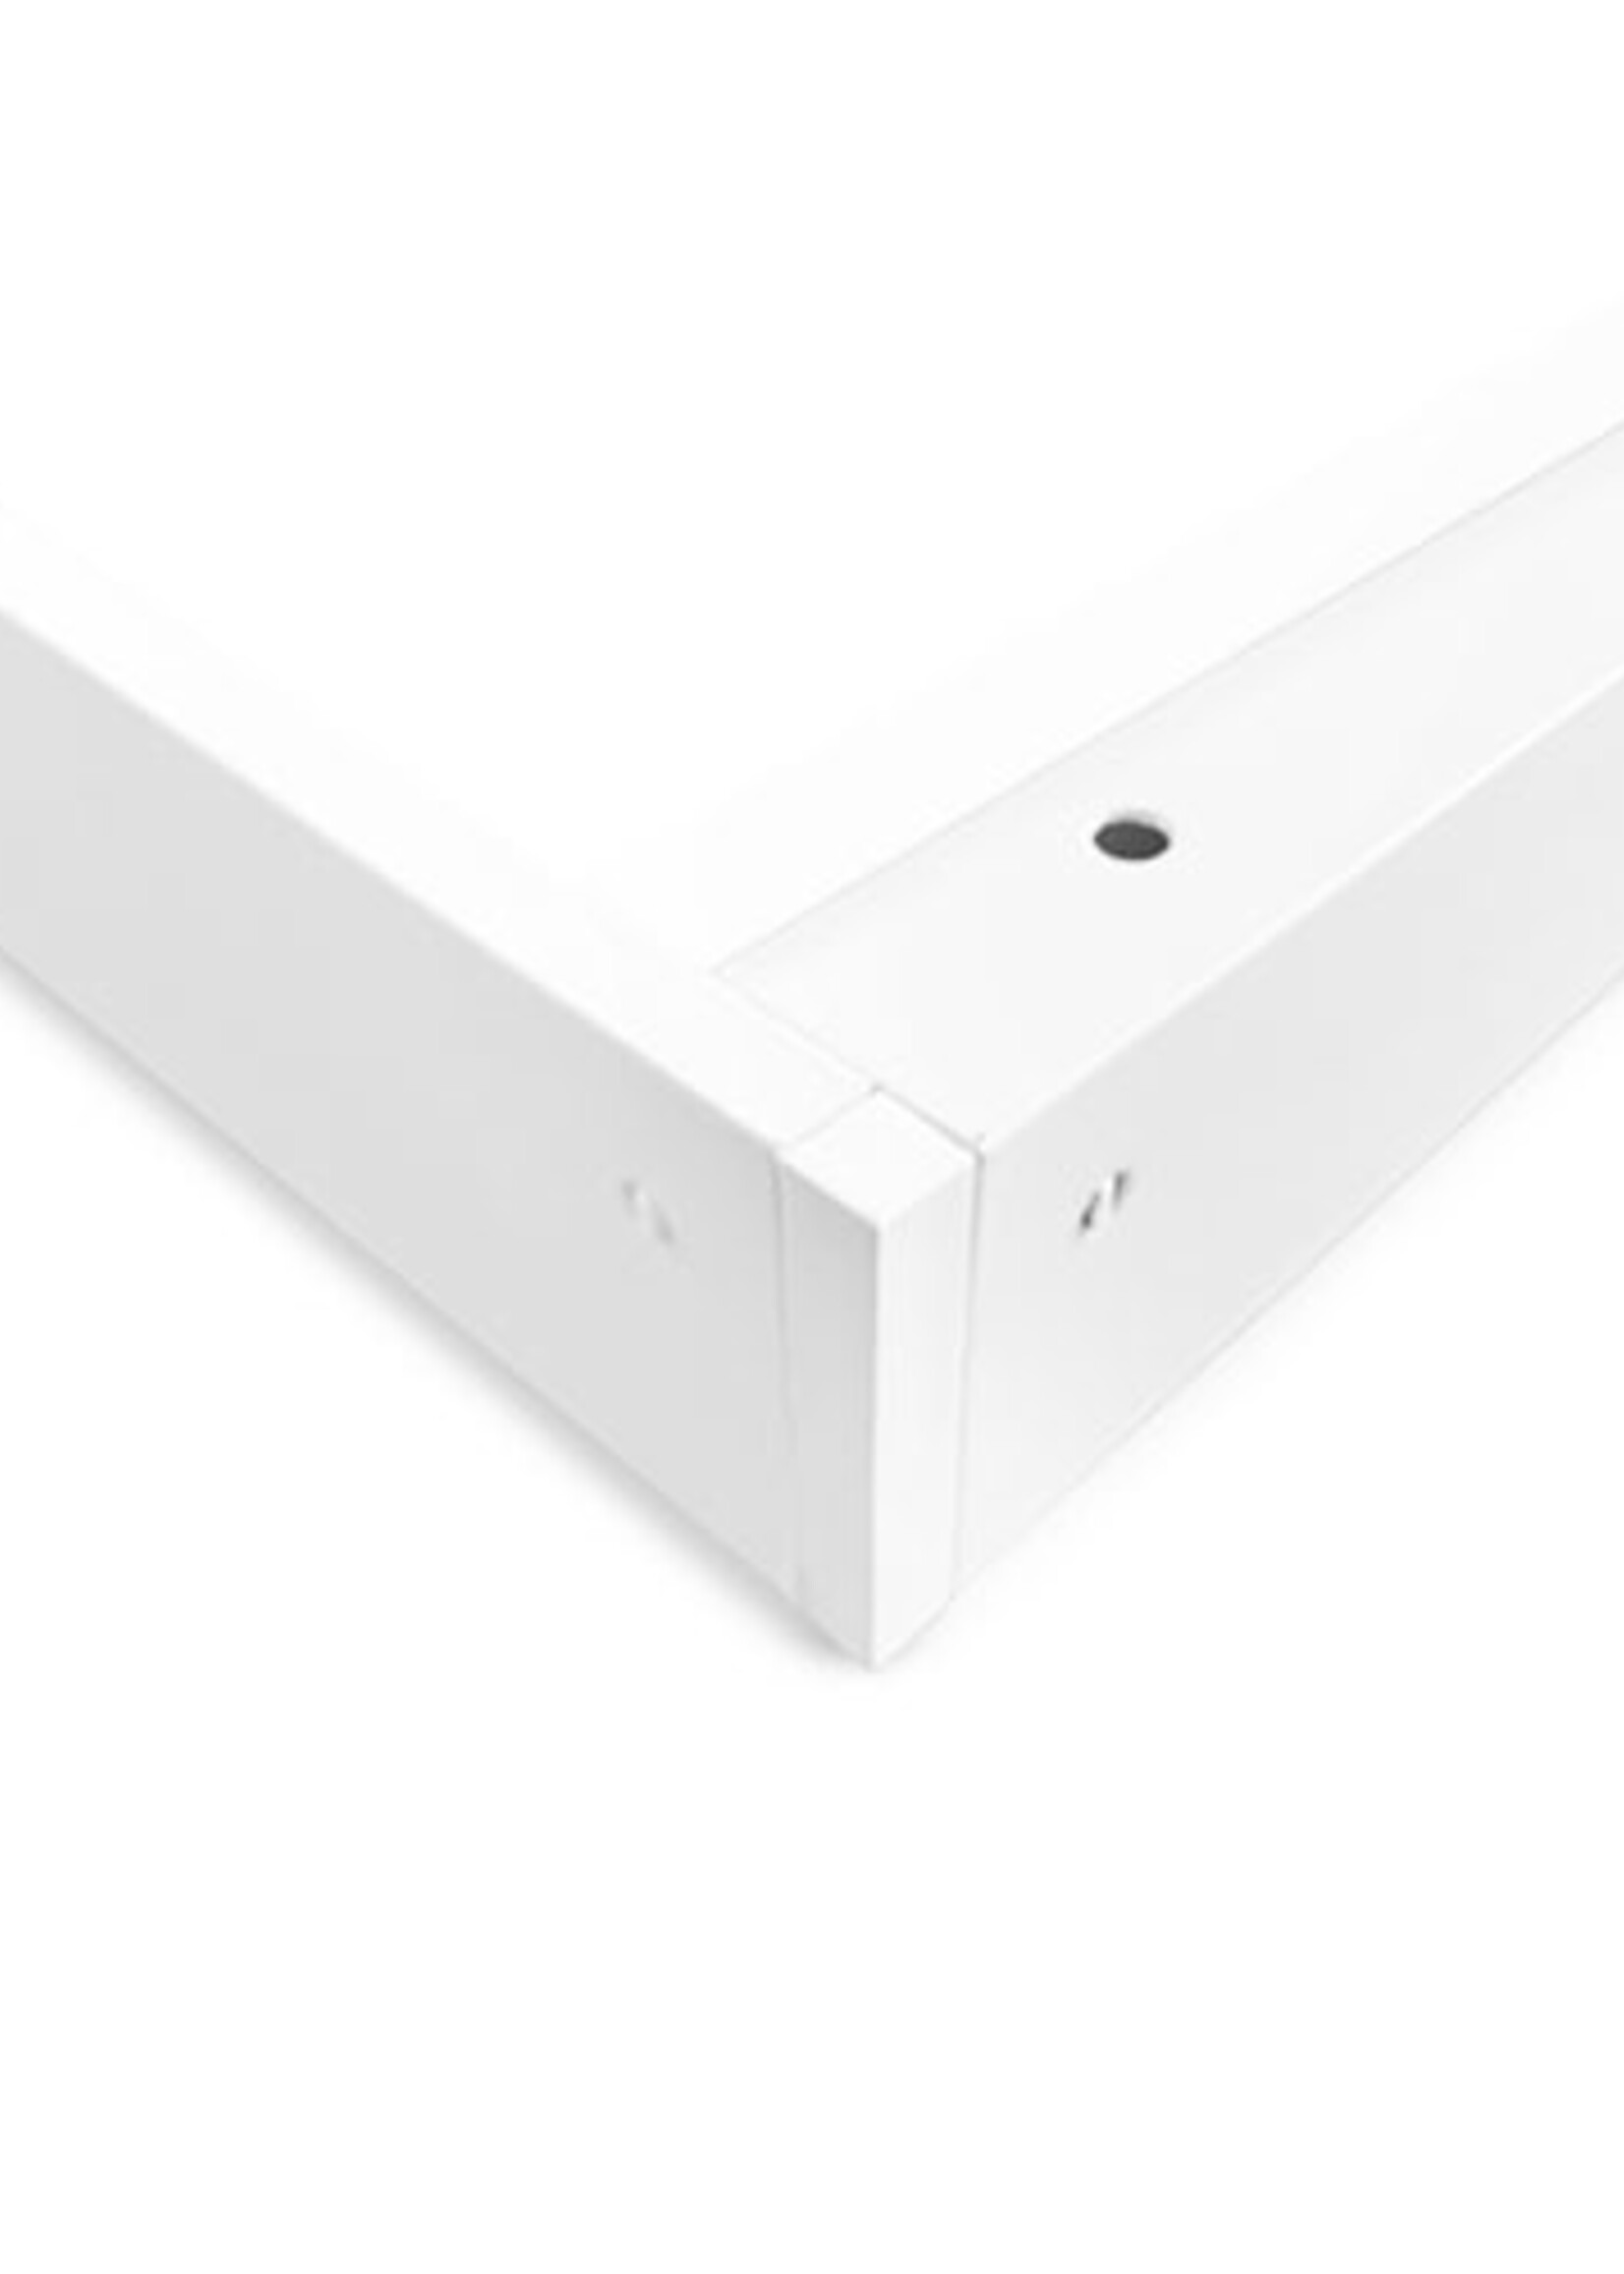 LEDWINKEL-Online LED Panel mounting frame 30x60cm white